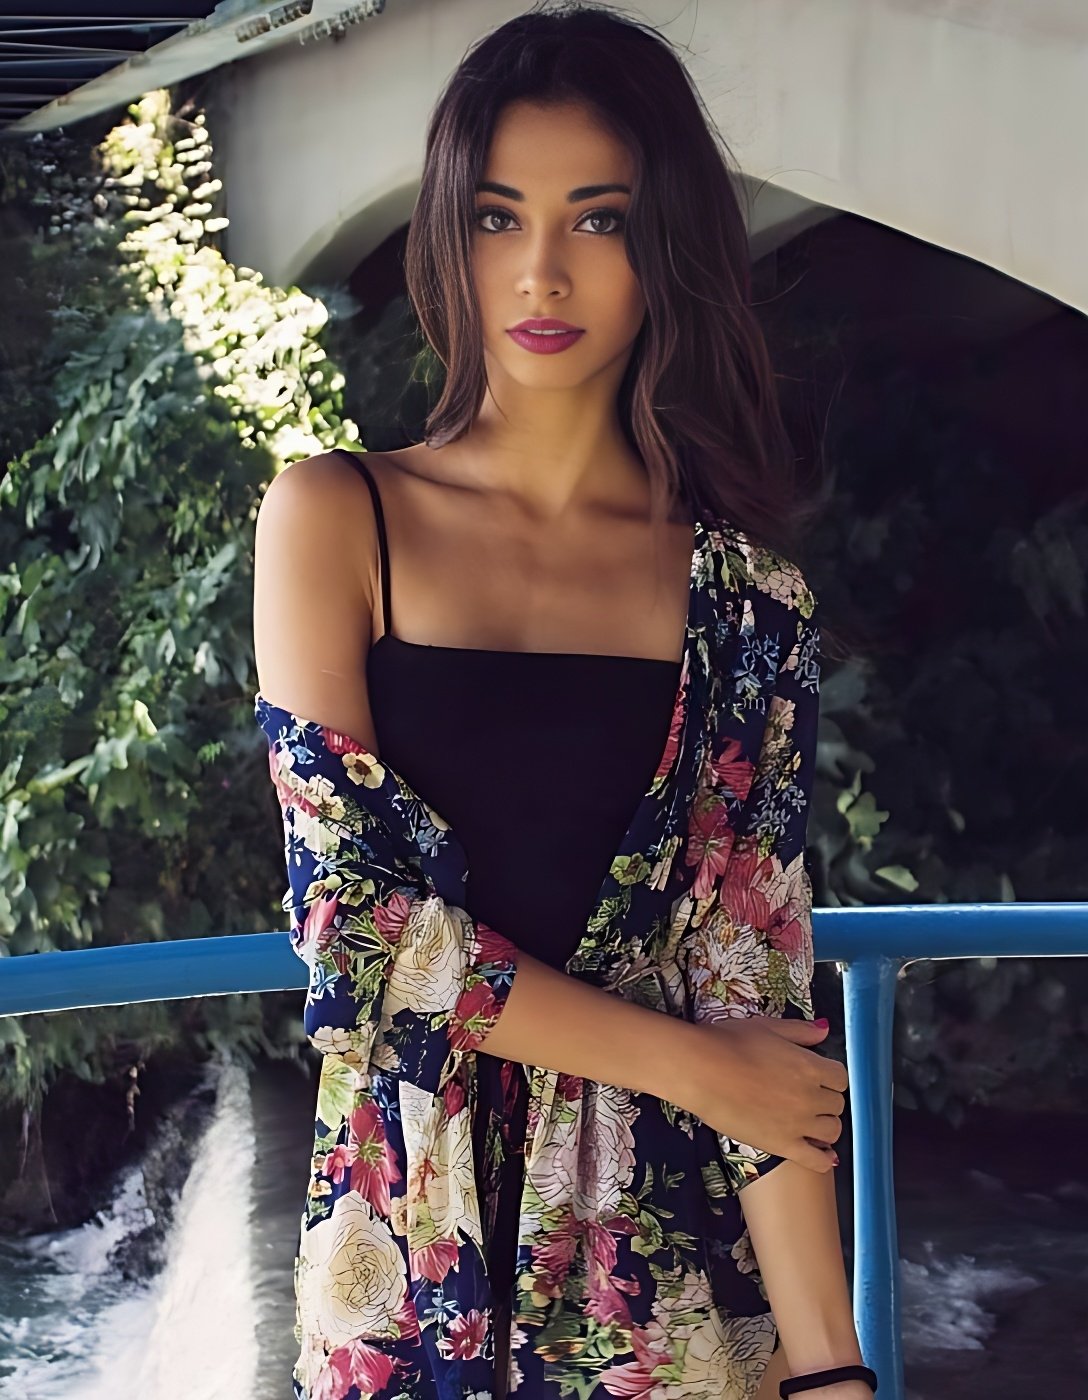 Meet Amazing Syra: Top Escort Girl - model preview photo 2 